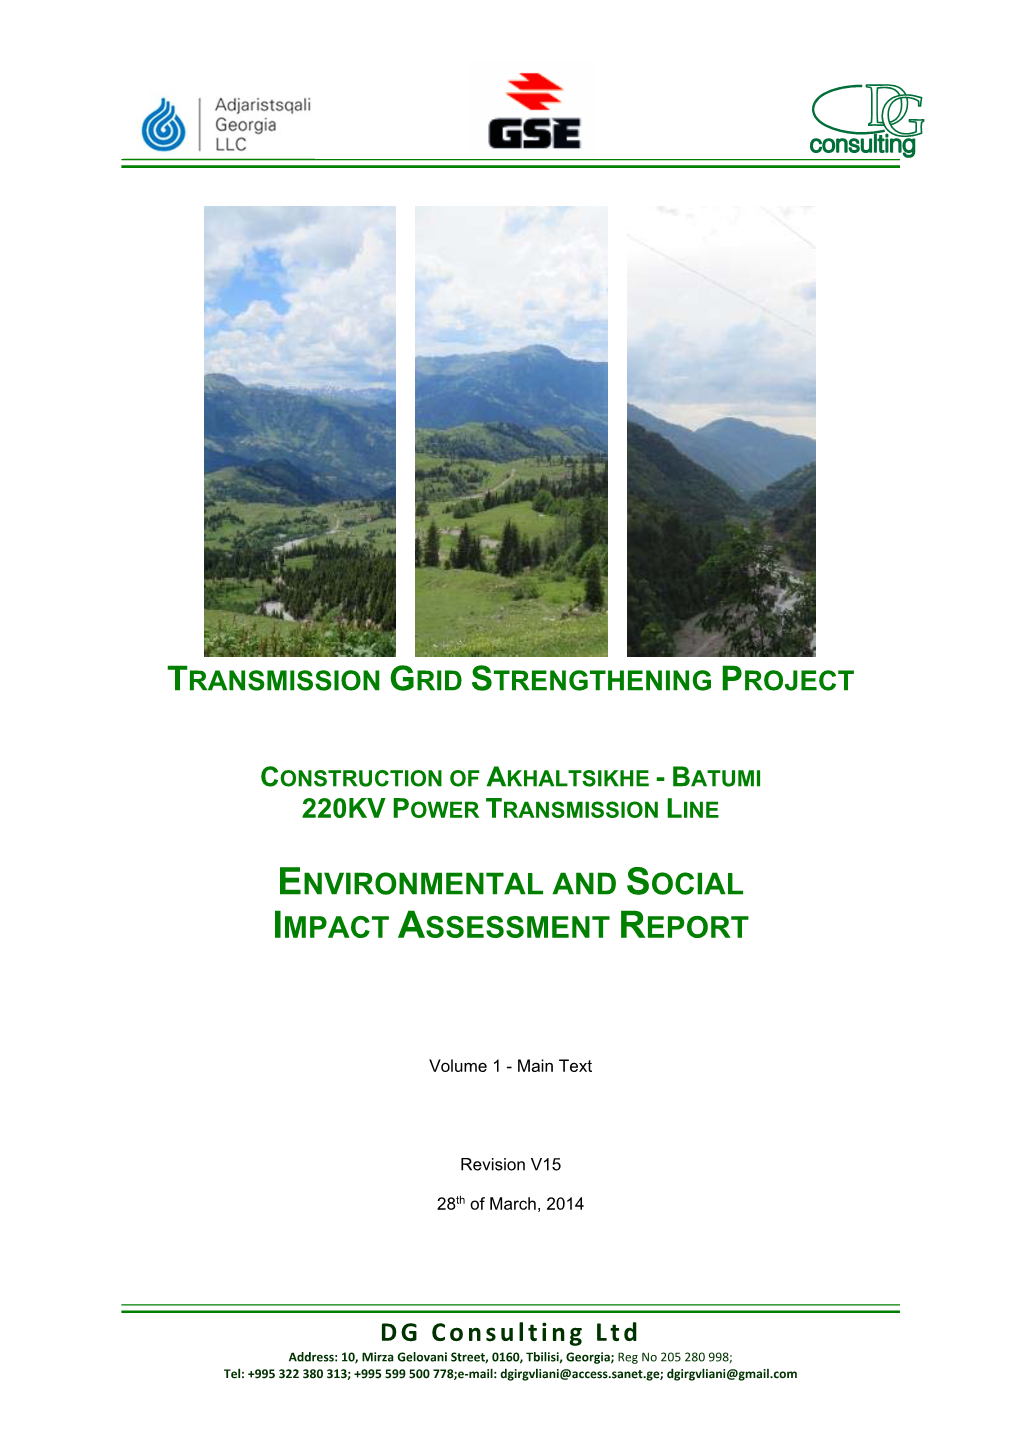 Environmental and Social Impact Assessment Report, Volume 1